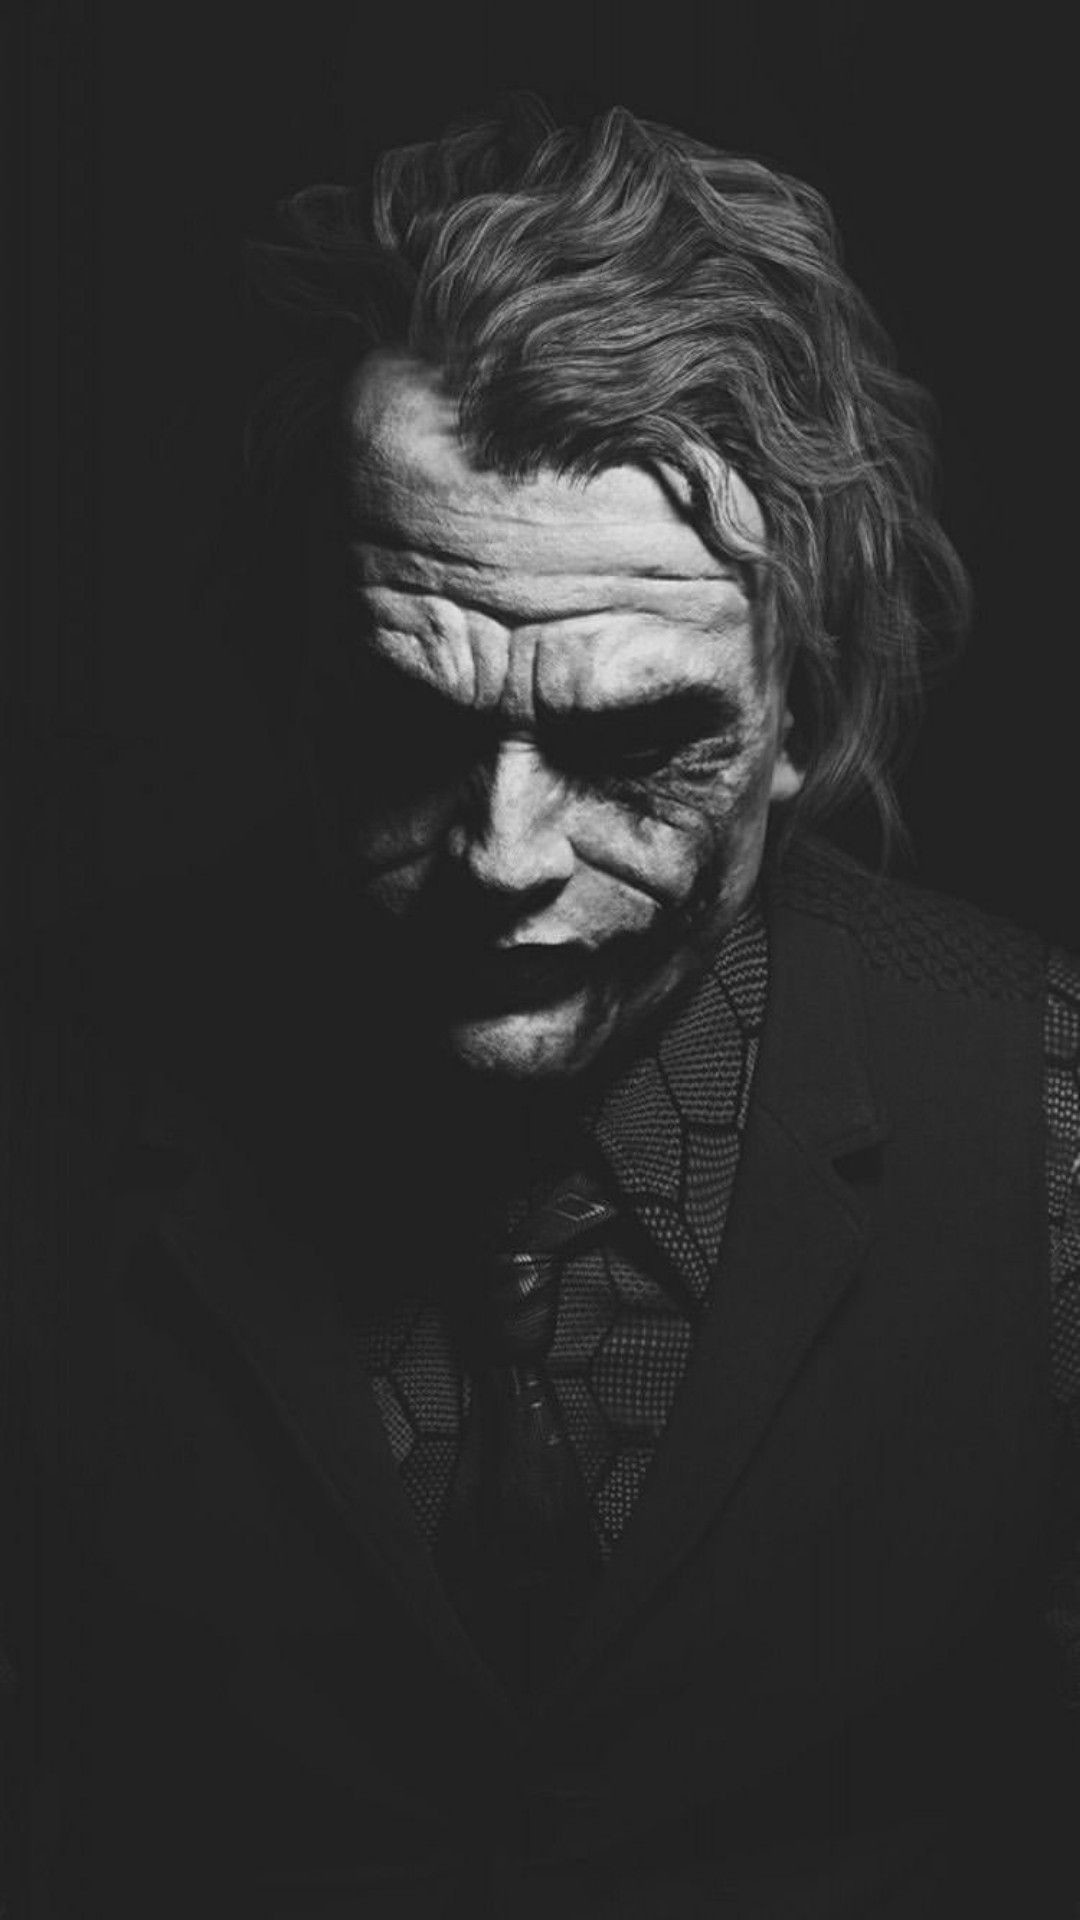 1080x1920 RIP Our Angel Heath Ledger â As The Joker In The Dark Knight Bat Man Movie.